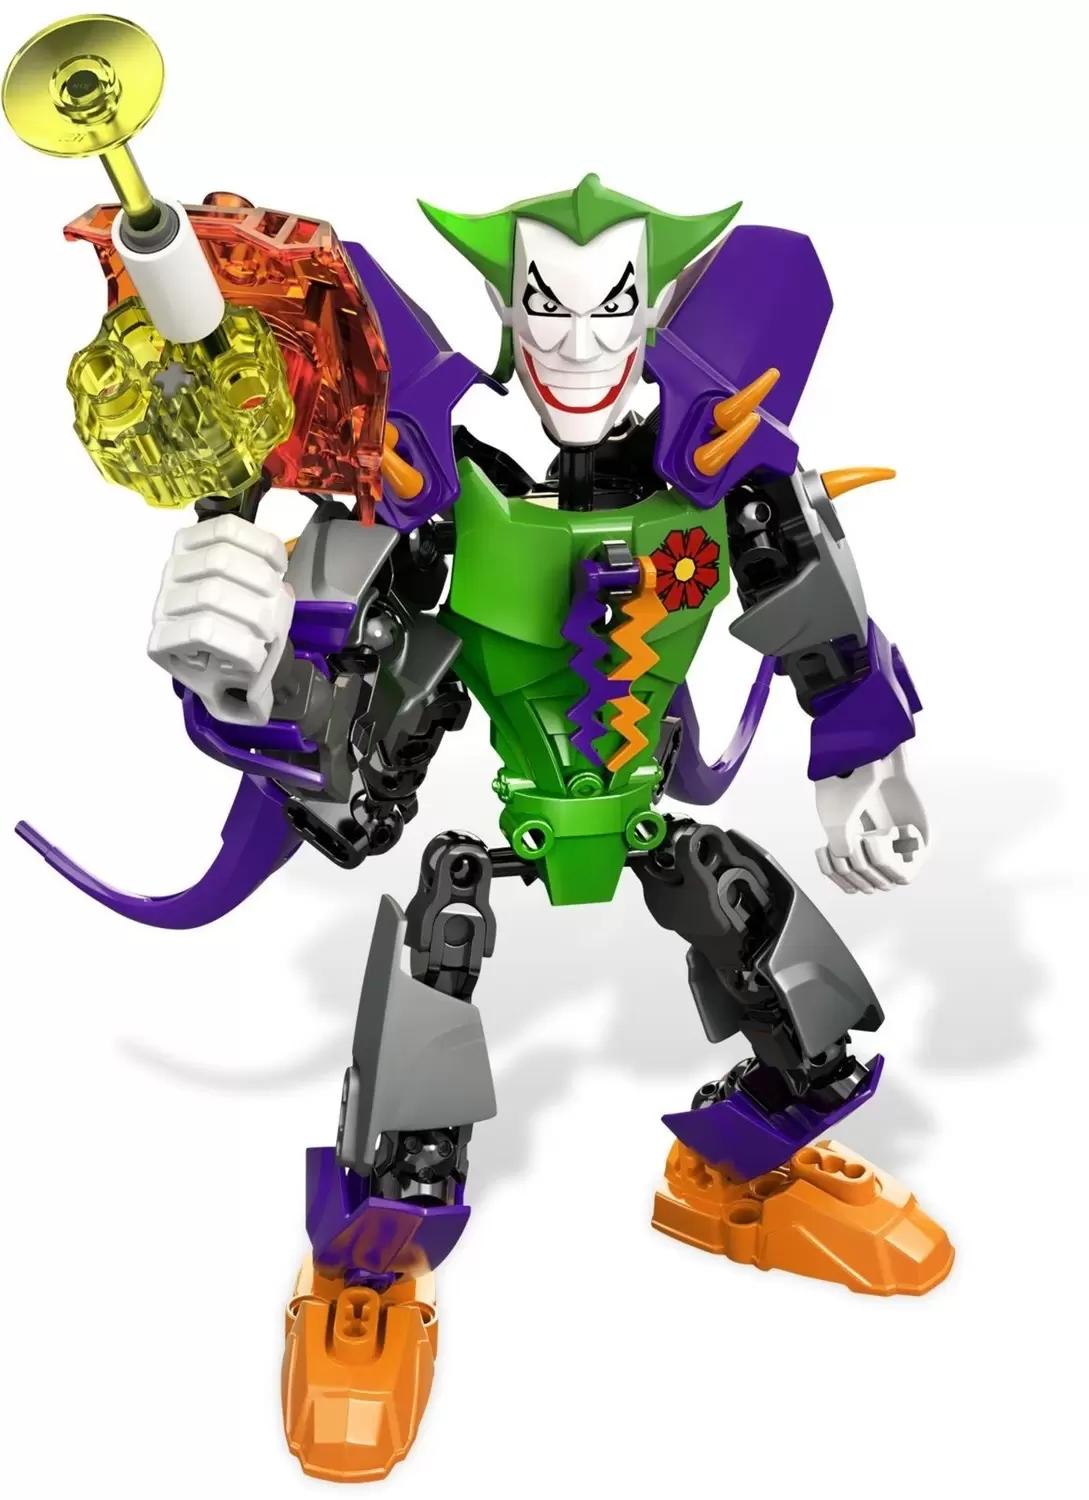 LEGO DC Comics Super Heroes - The Joker